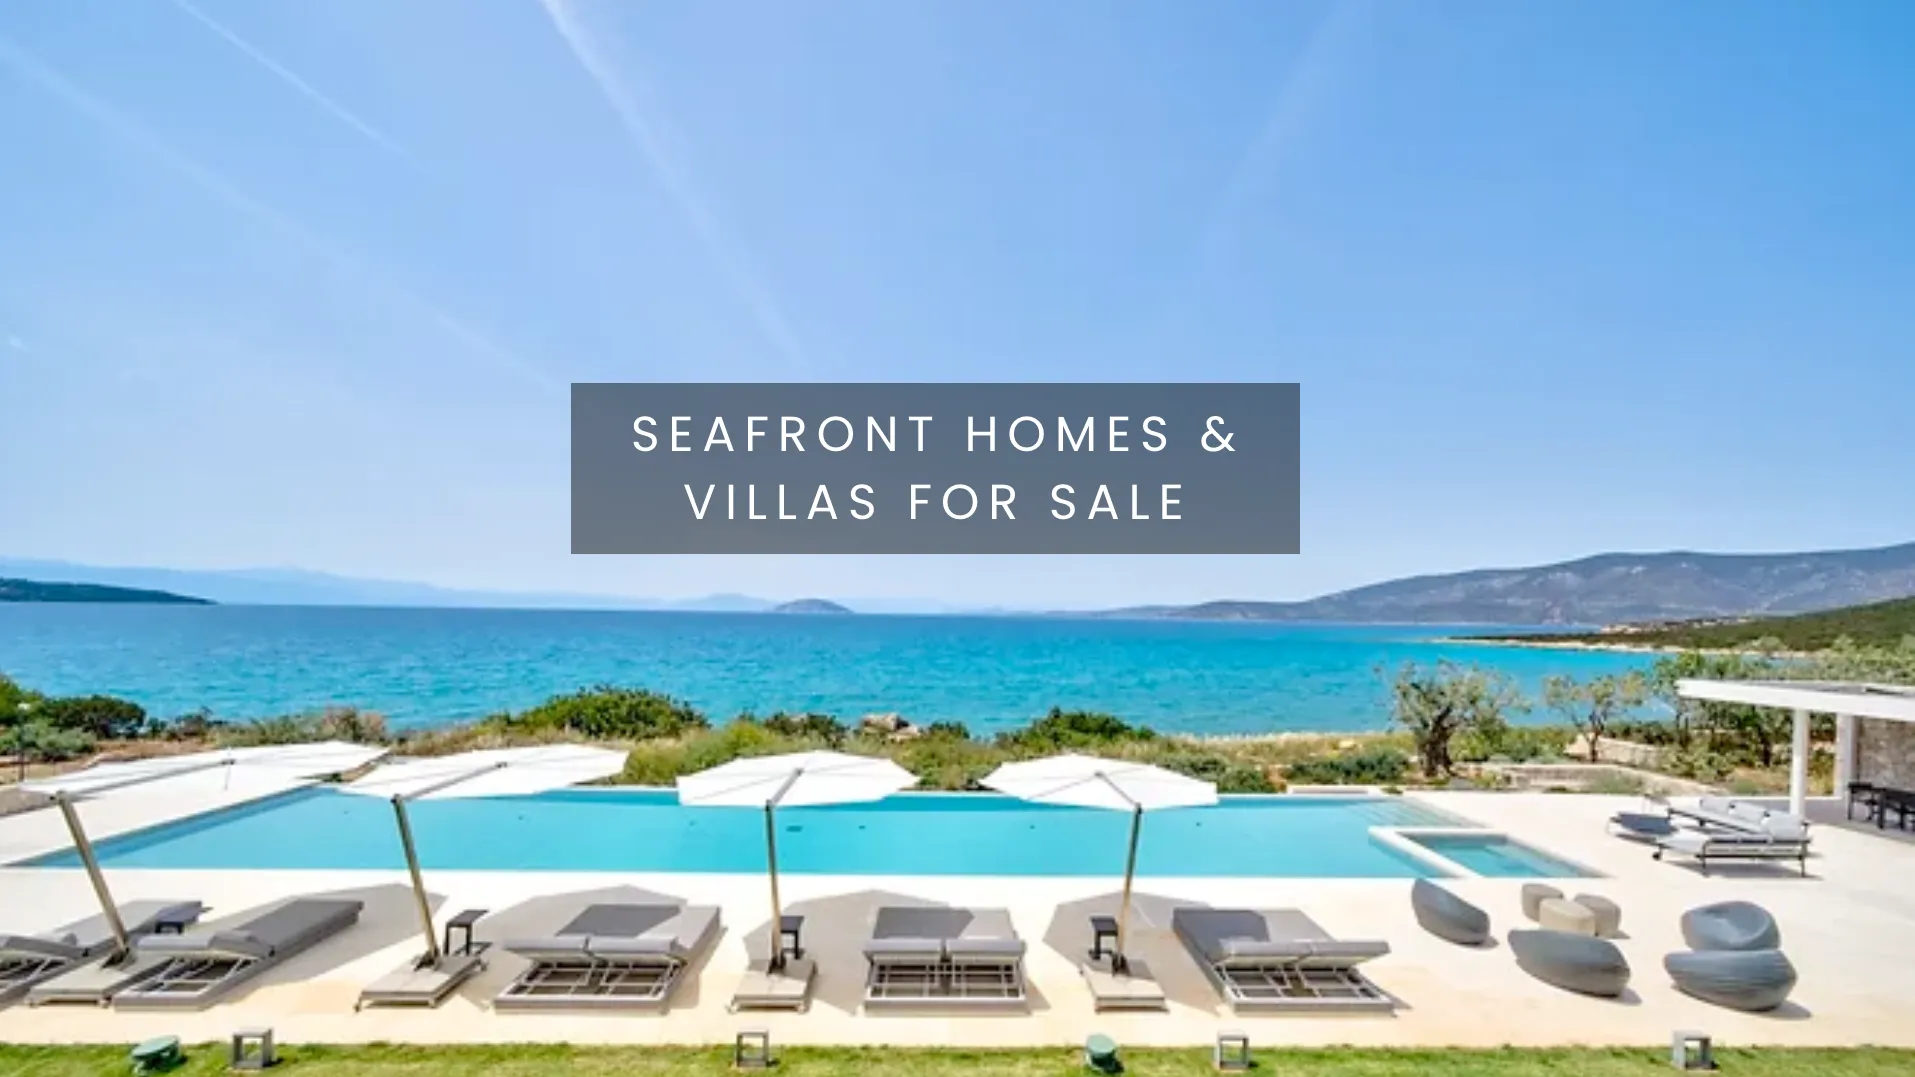 Greece beach houses for sale, Greece real estate beachfront